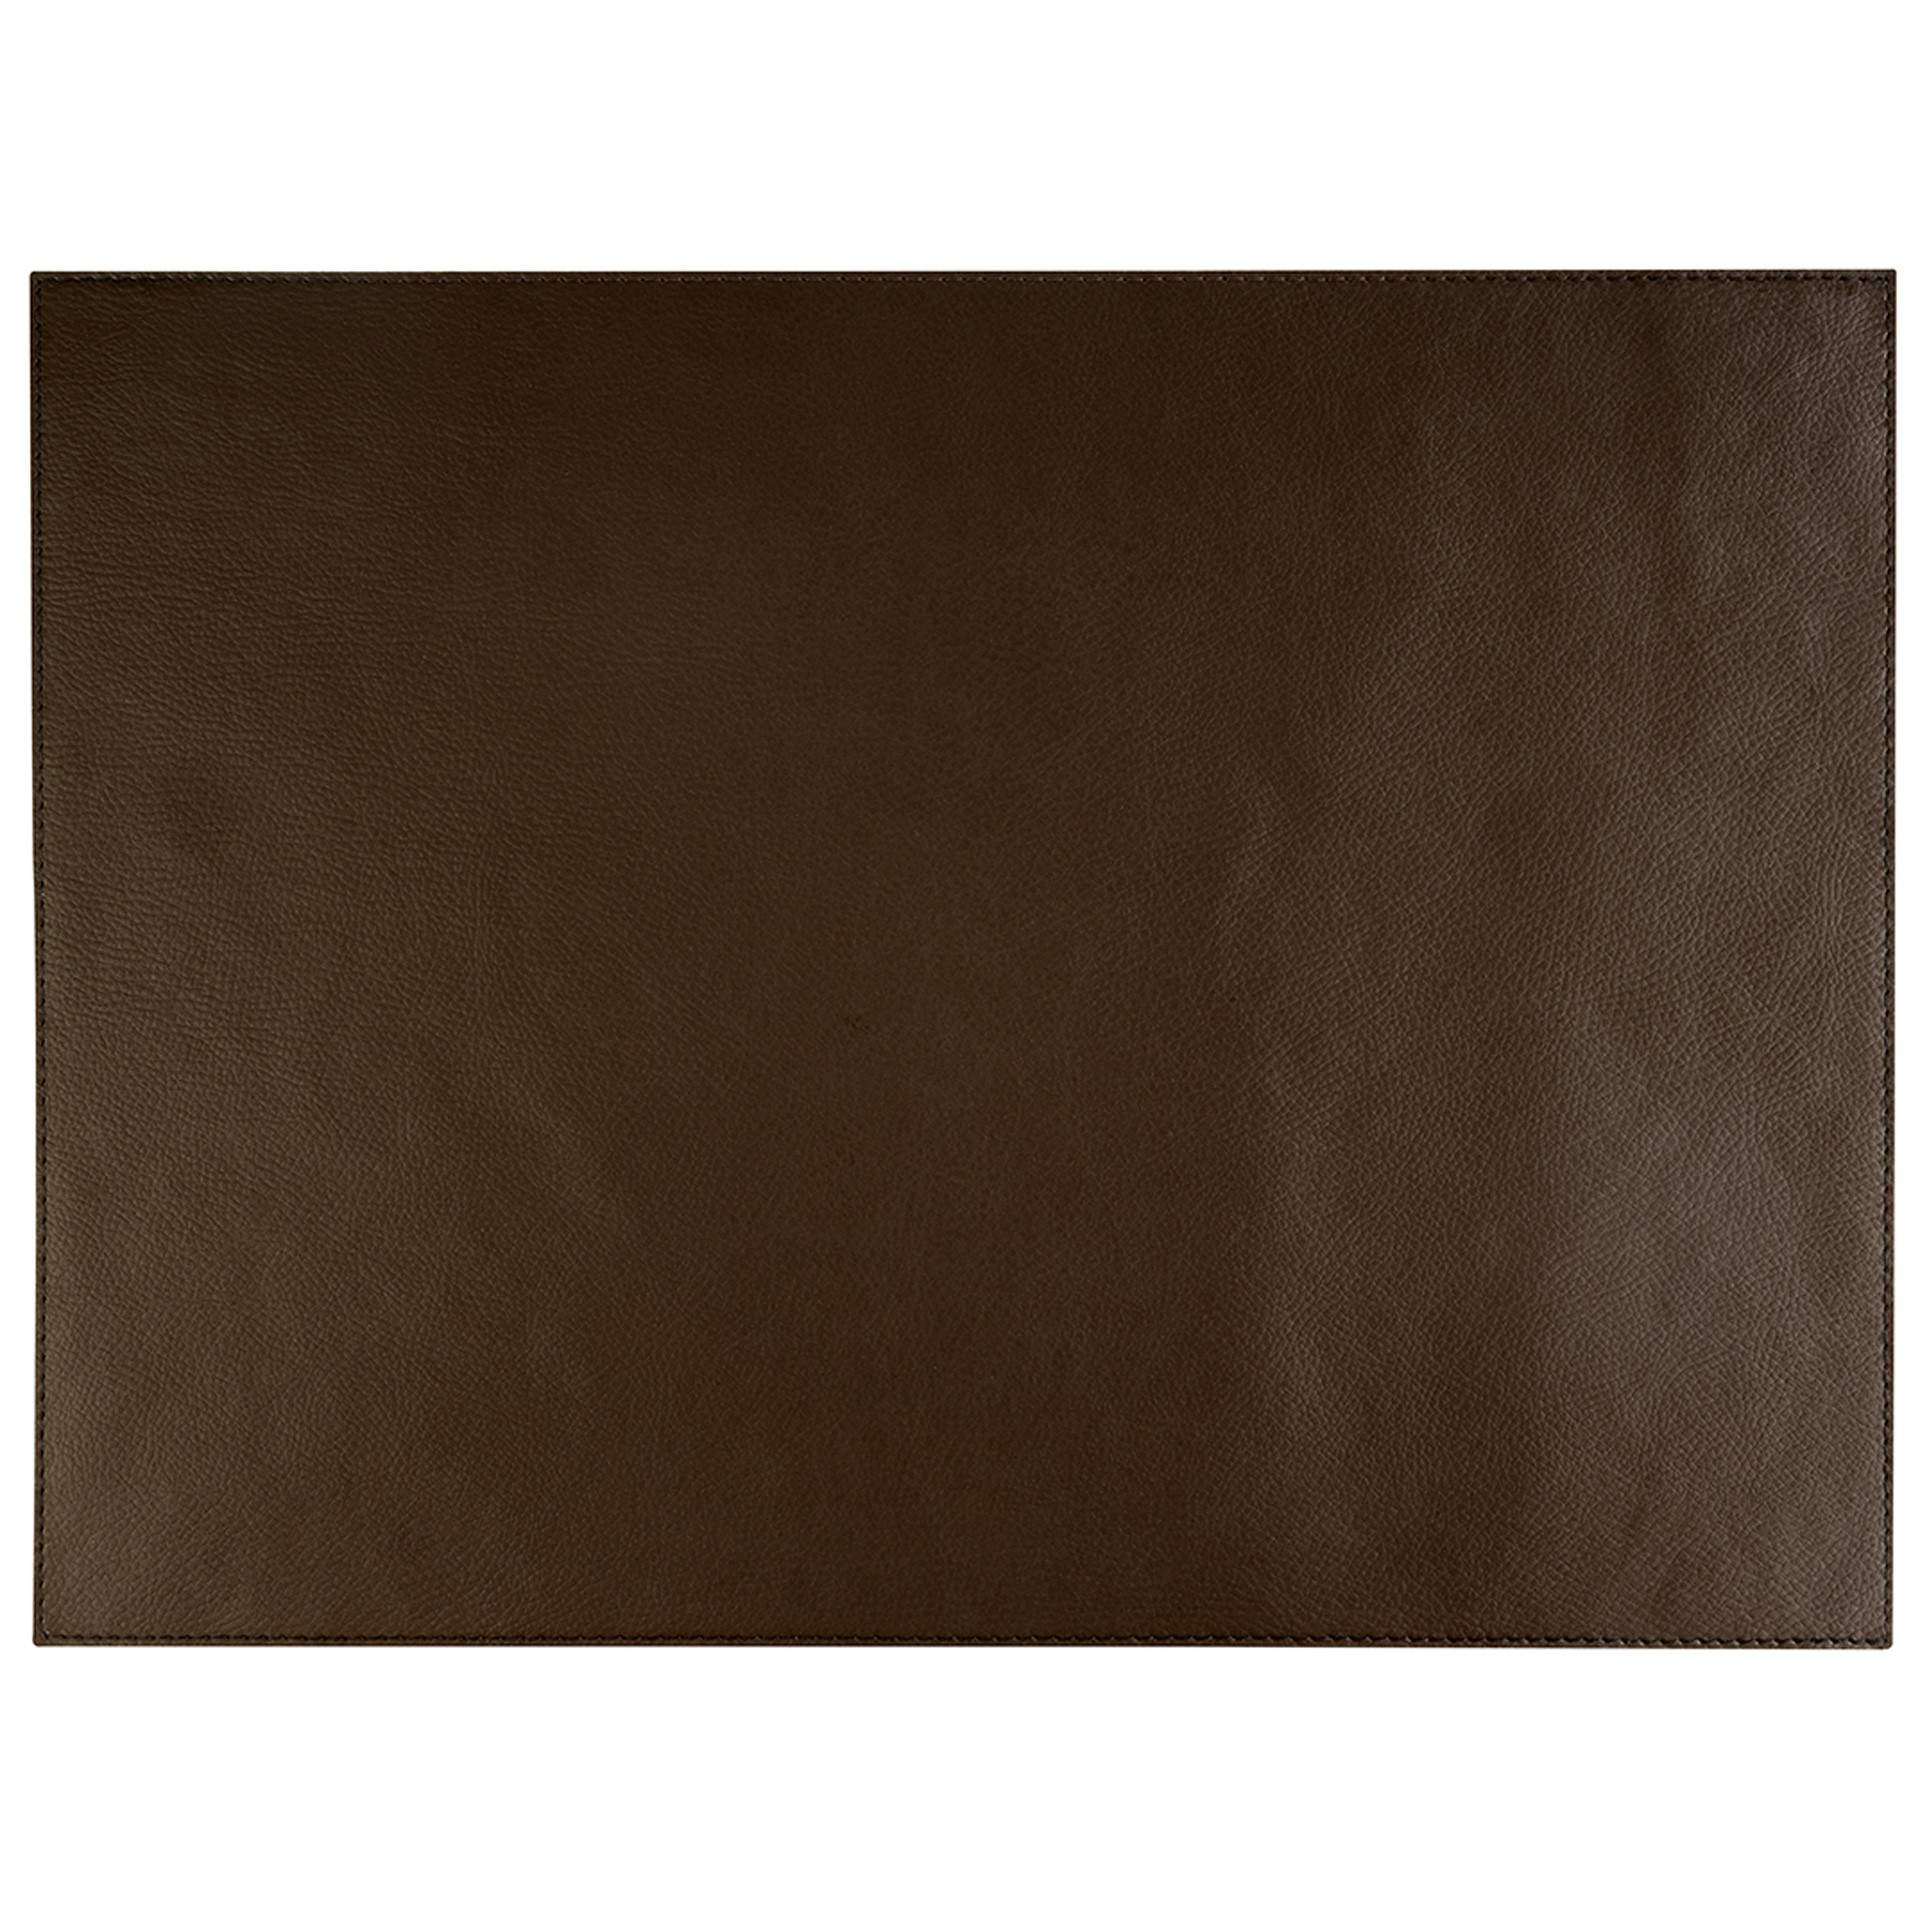 Tischset - braun - rechteckig - Abm. 45 x 32,5 cm - Kunstleder - 60045-B